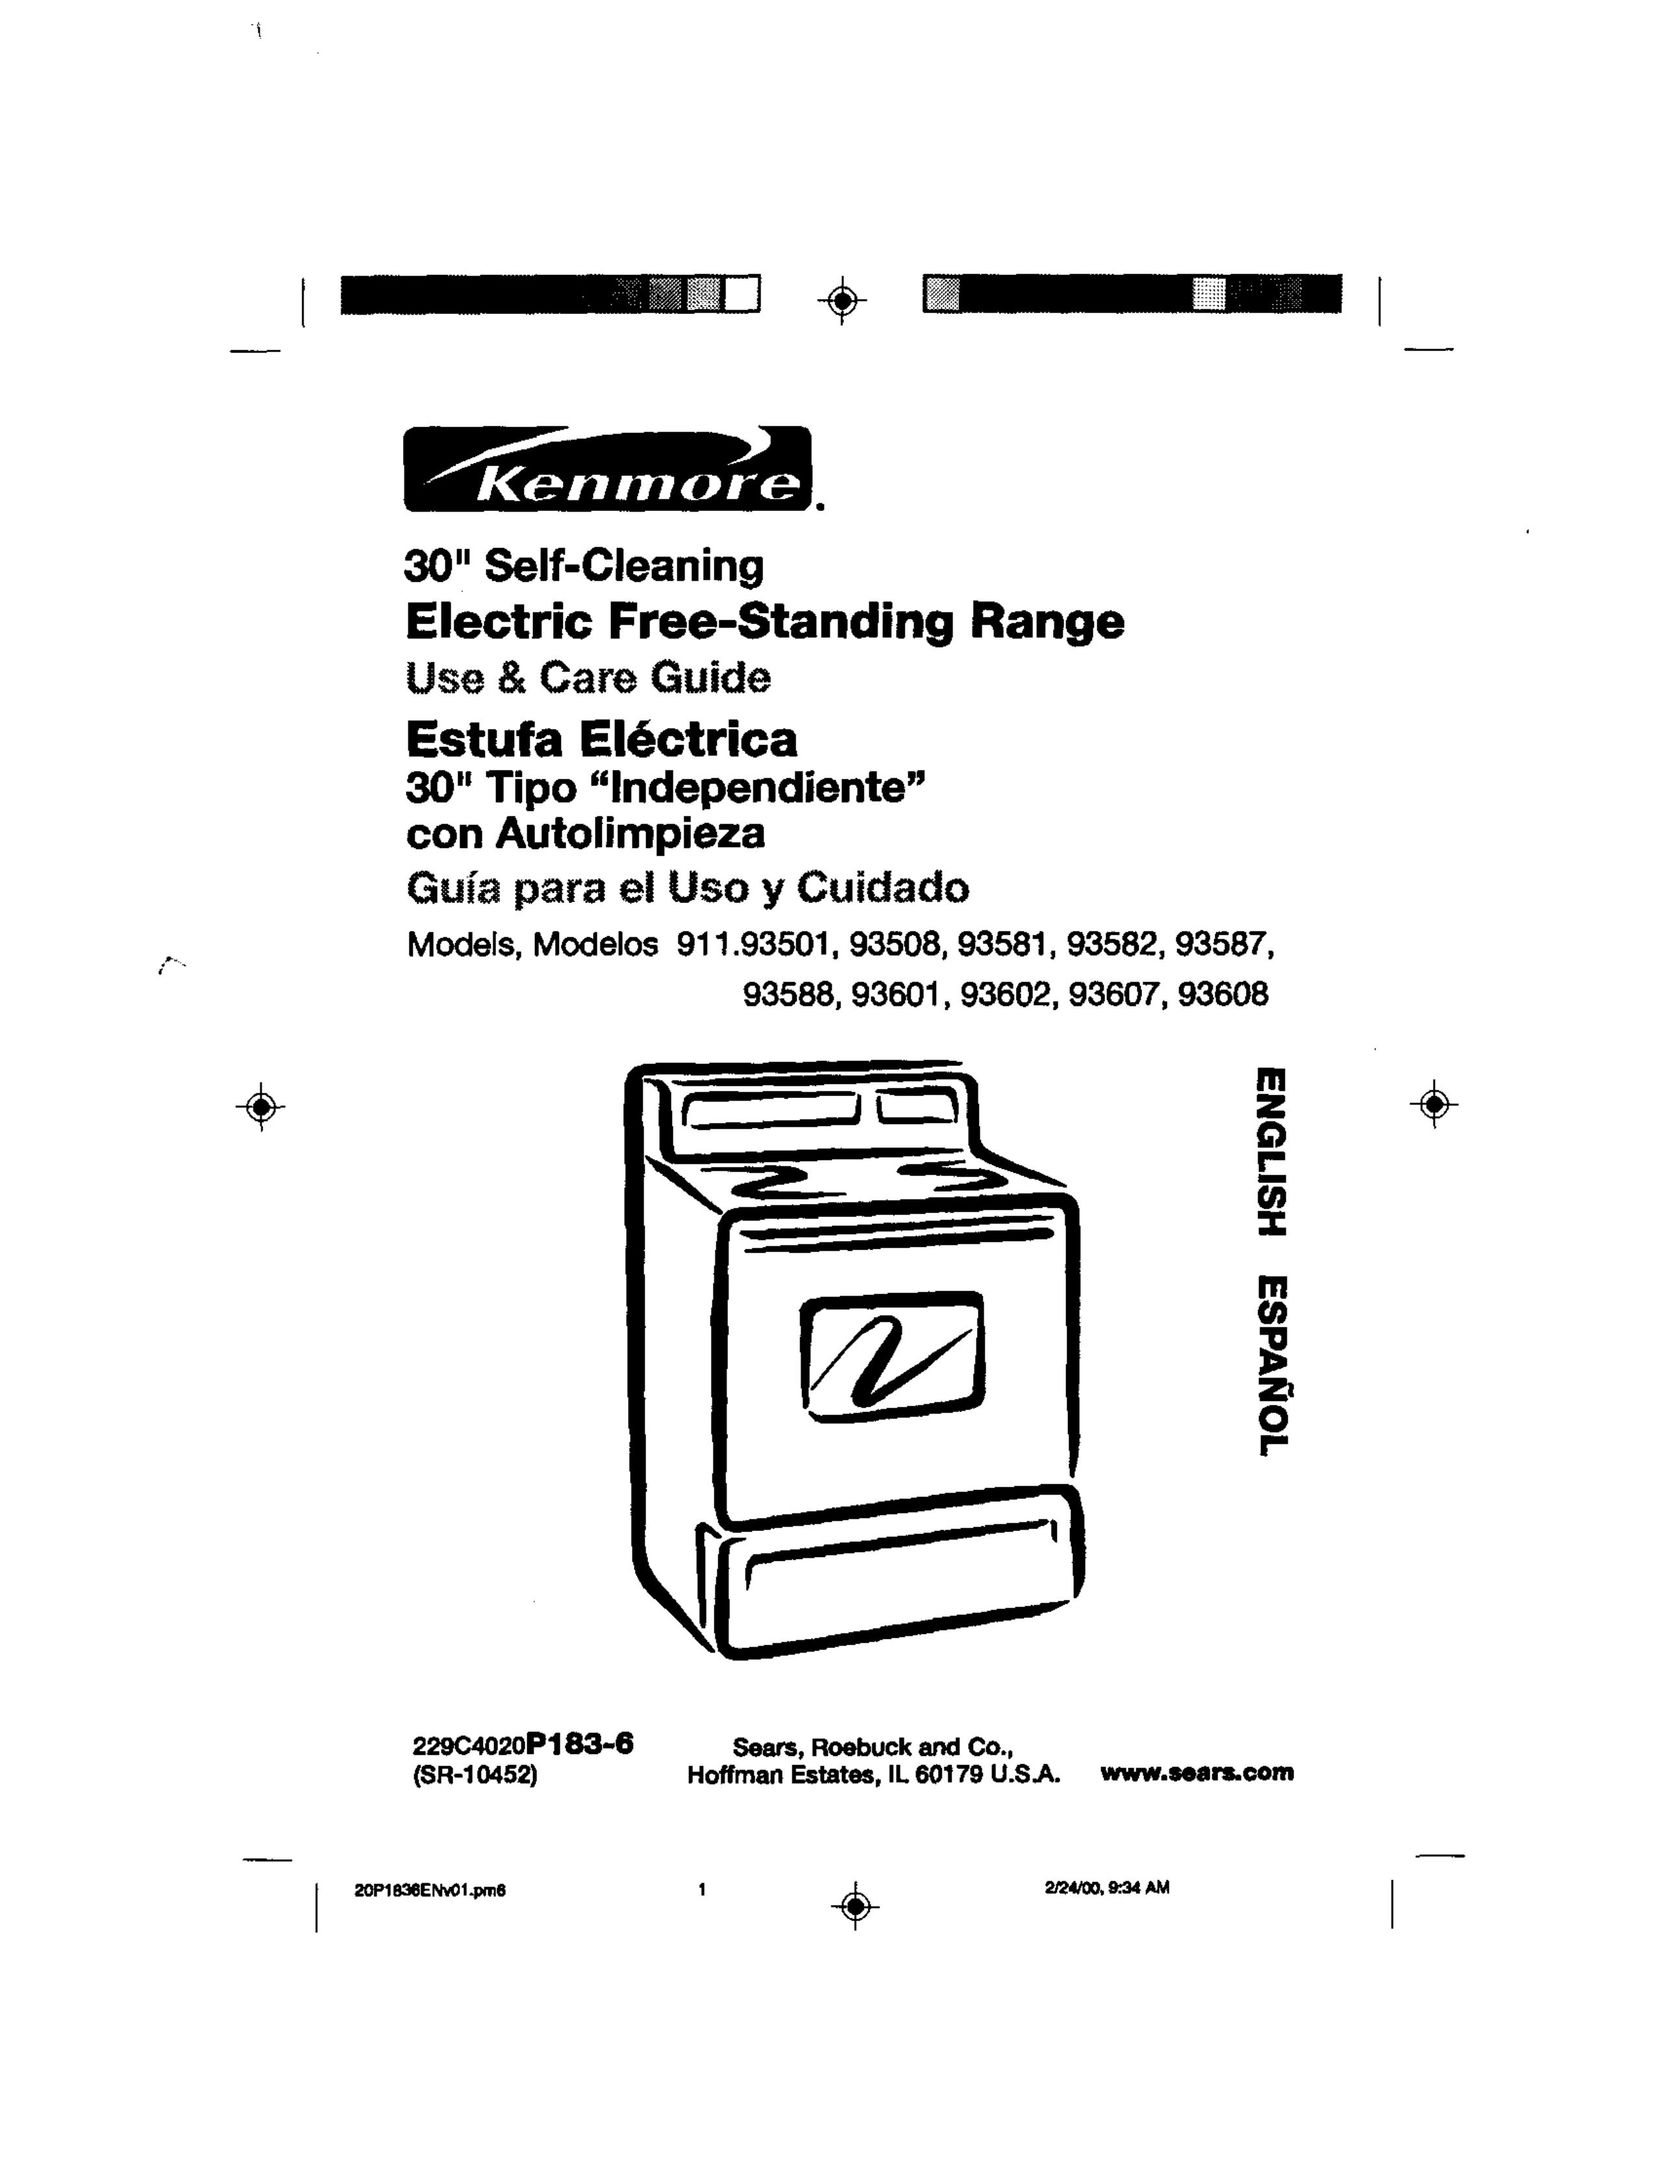 Kenmore 911.93508 Oven User Manual